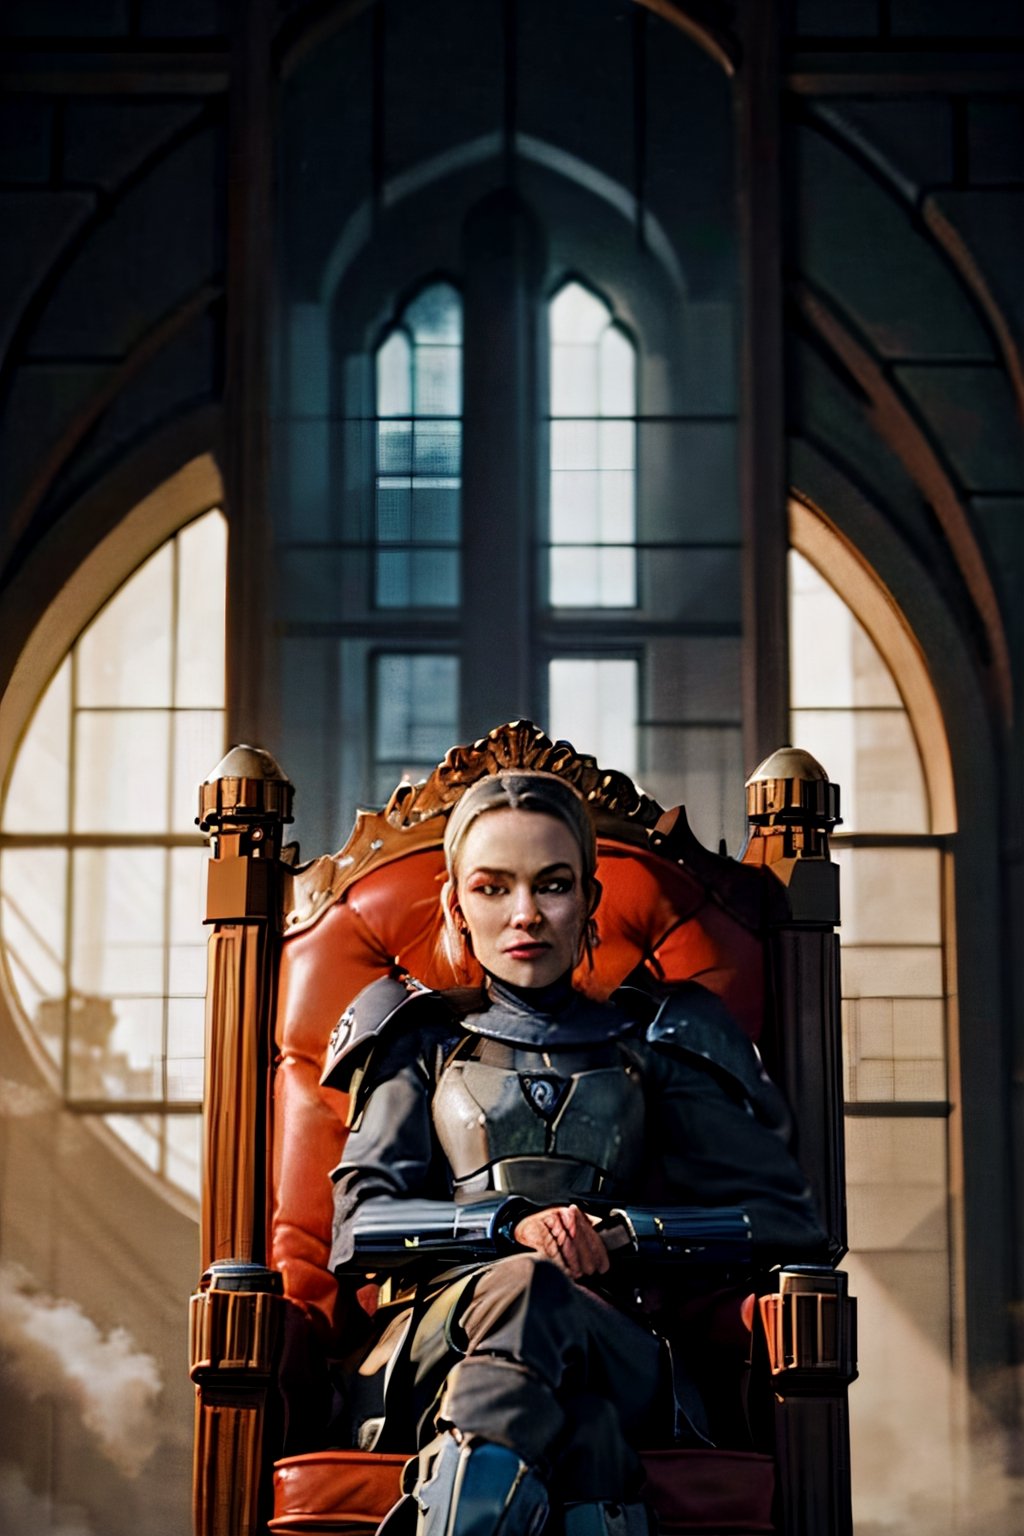 bokatan, facial portrait, sexy stare, smirked, sitting on big throne, inside castle, big windows, cloudy sky outside, 